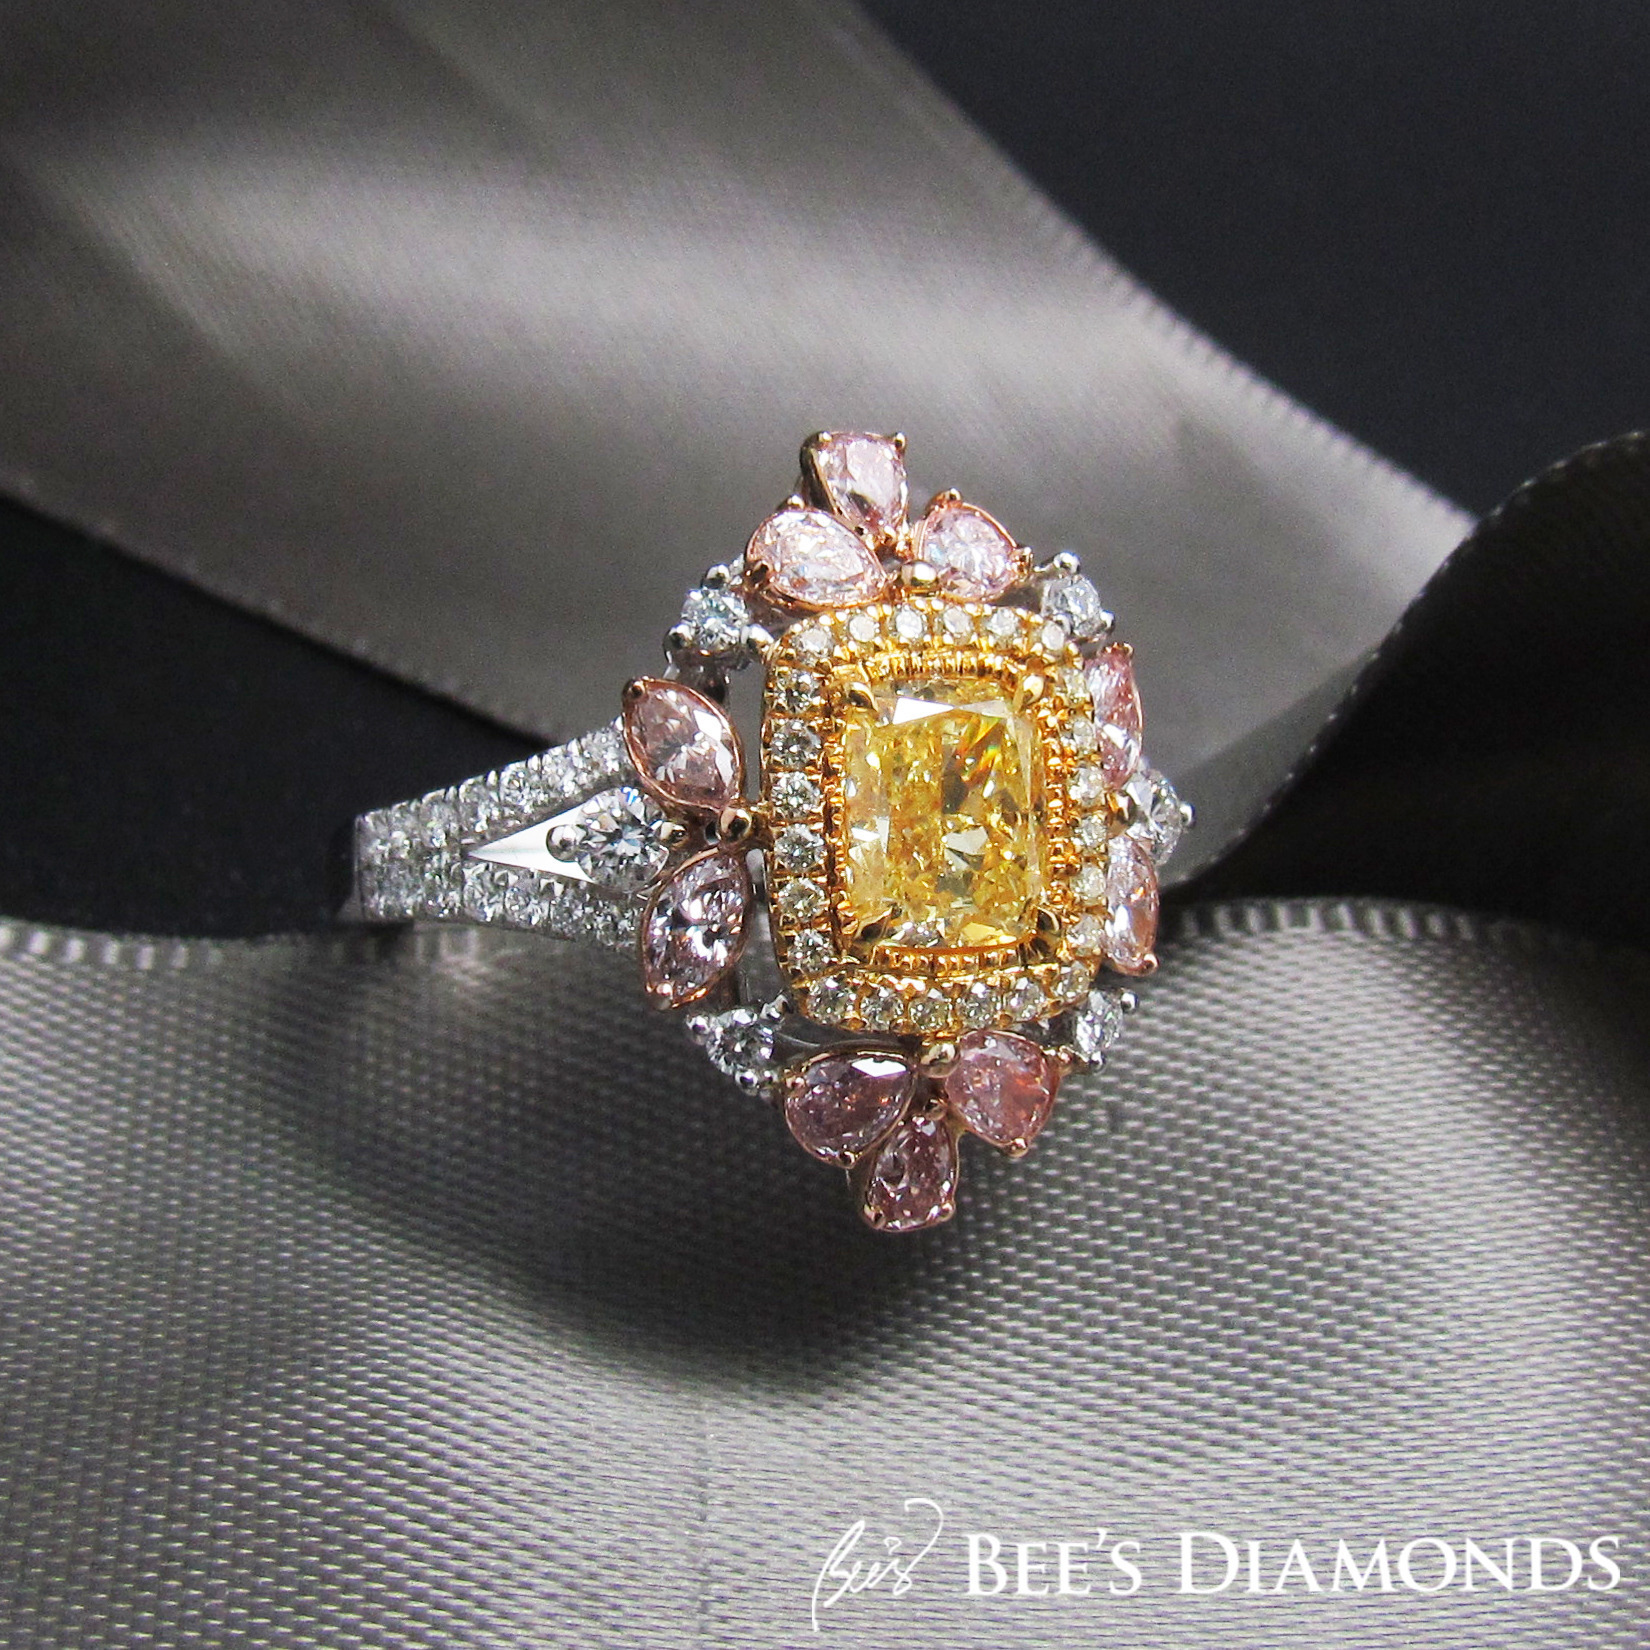 Pink and yellow diamond ring | Bee's Diamonds